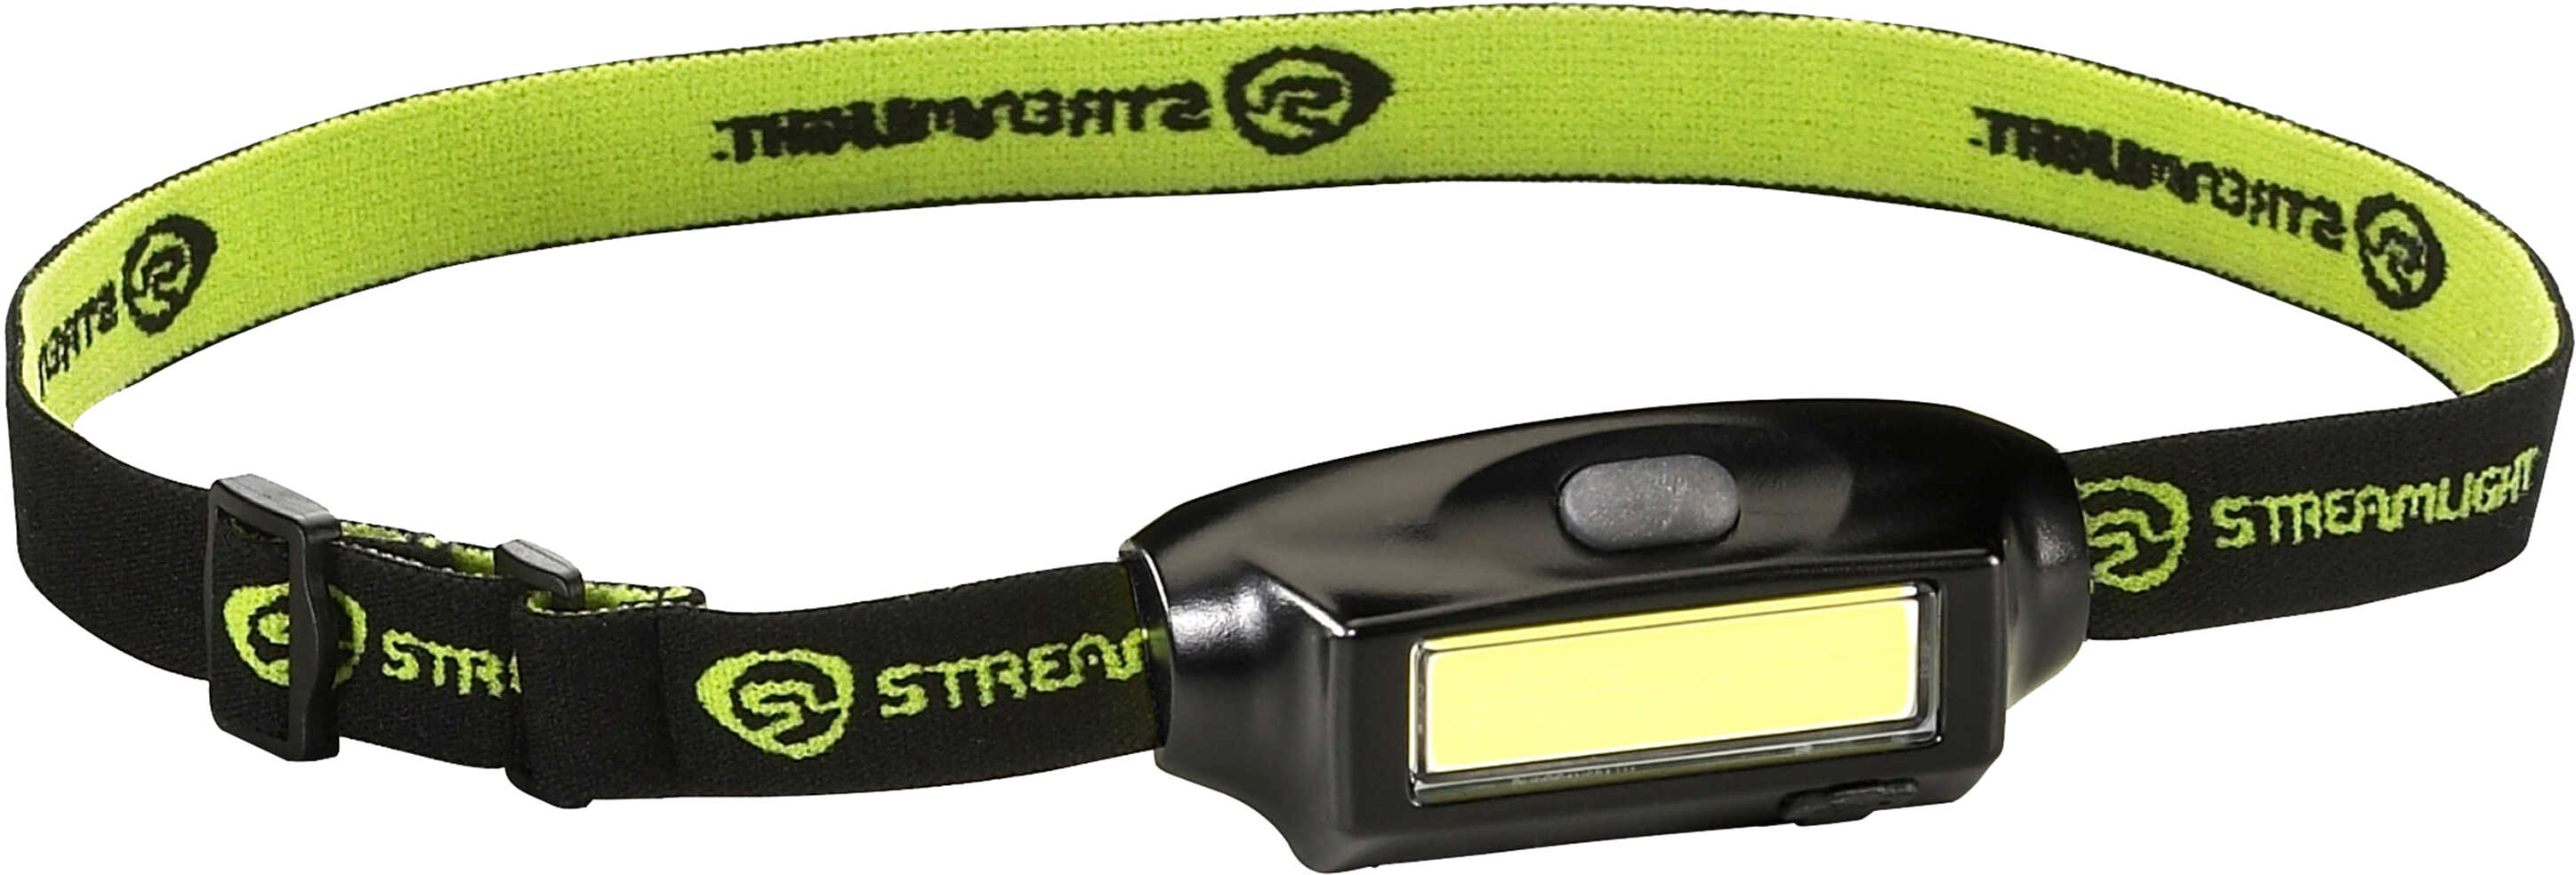 Streamlight Bandit Headlamp 5" Micro-USB Cord Yellow 61700